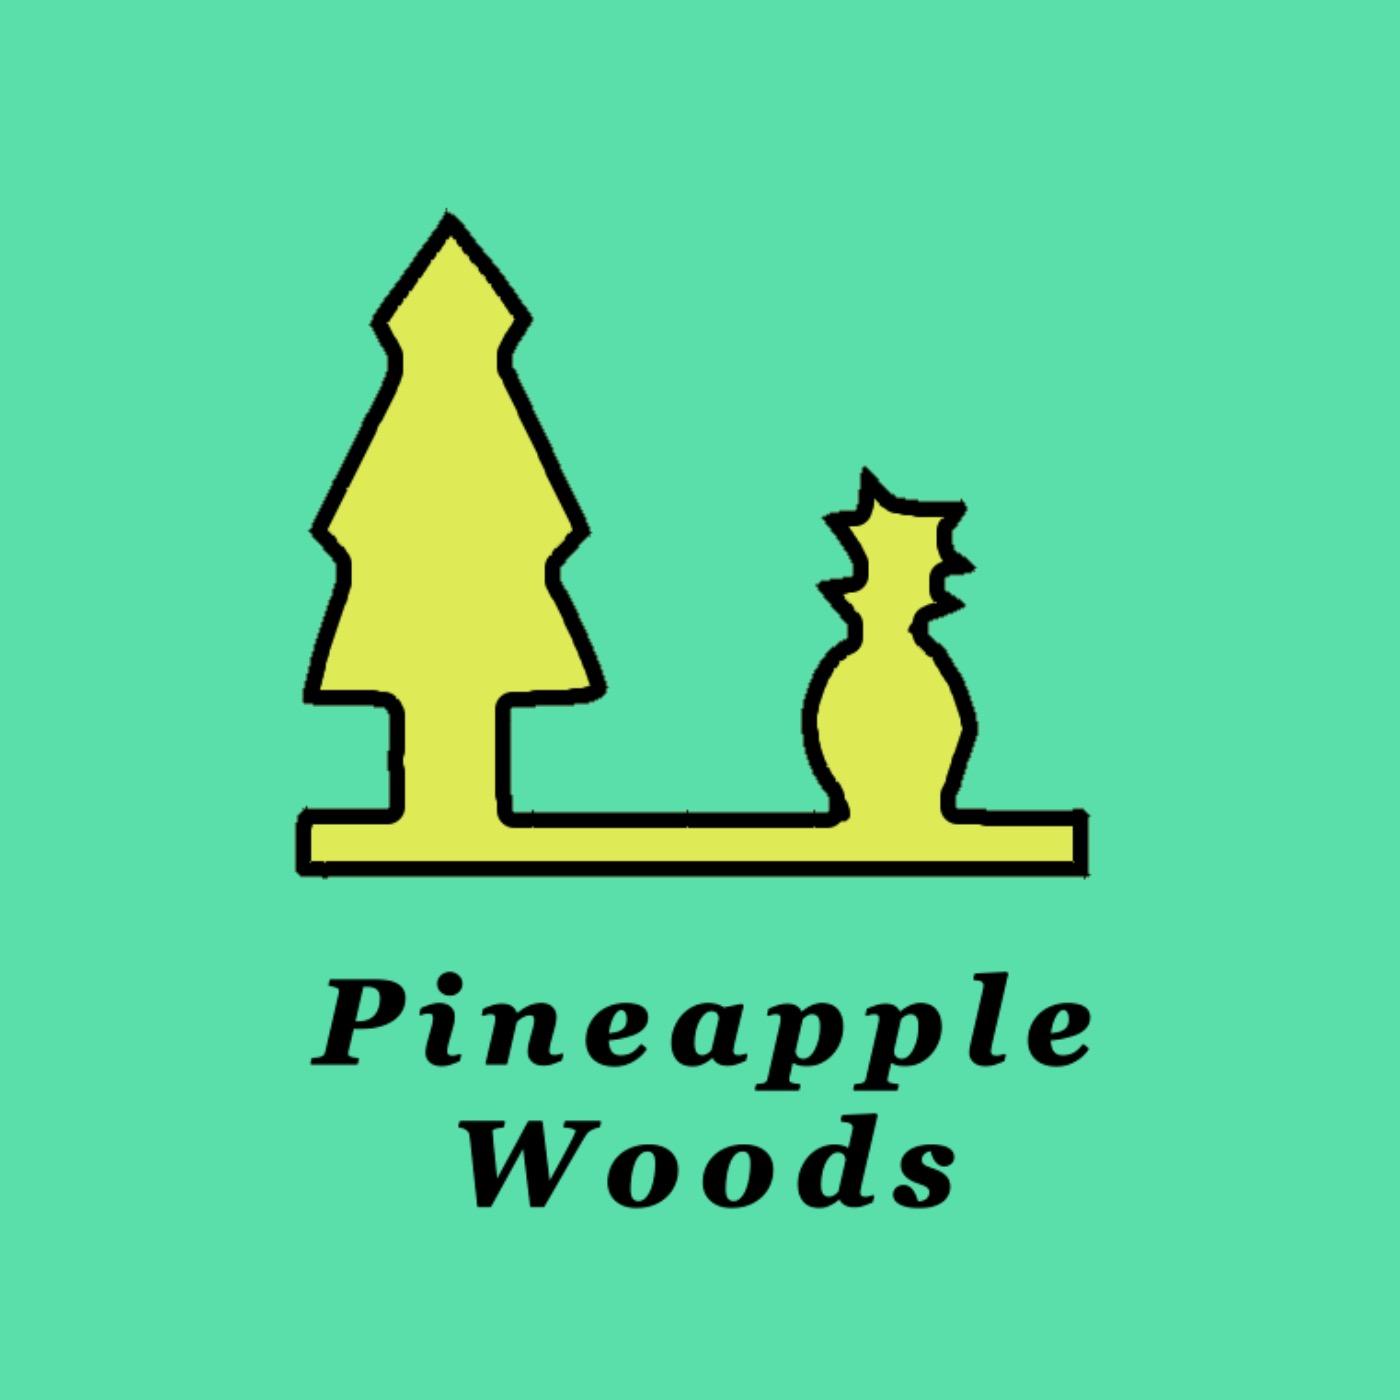 Pineapple Woods